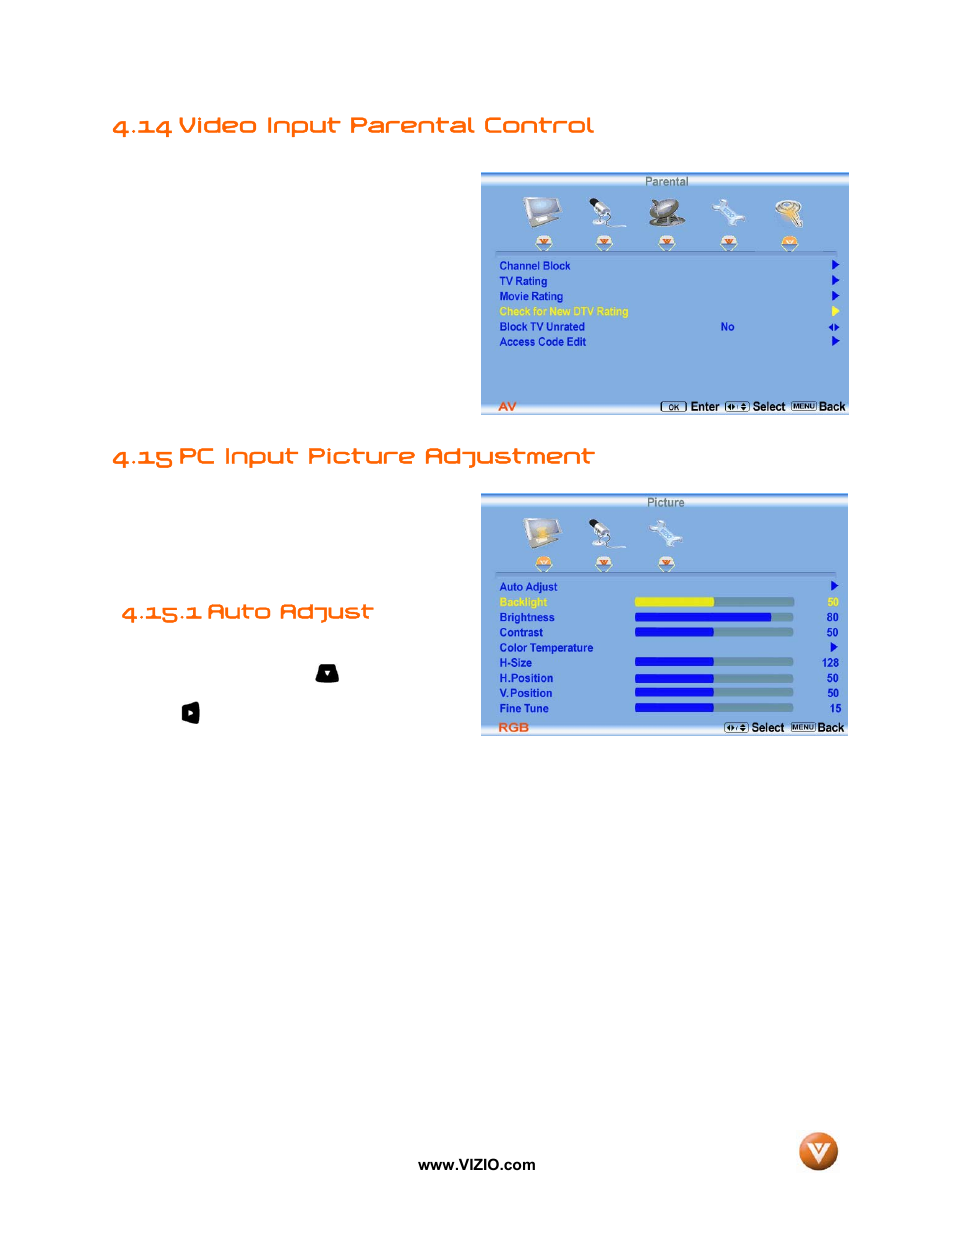 14 video input parental control, 15 pc input picture adjustment, 1 auto adjust | Vizio GV46L FHDTV20A User Manual | Page 57 / 85